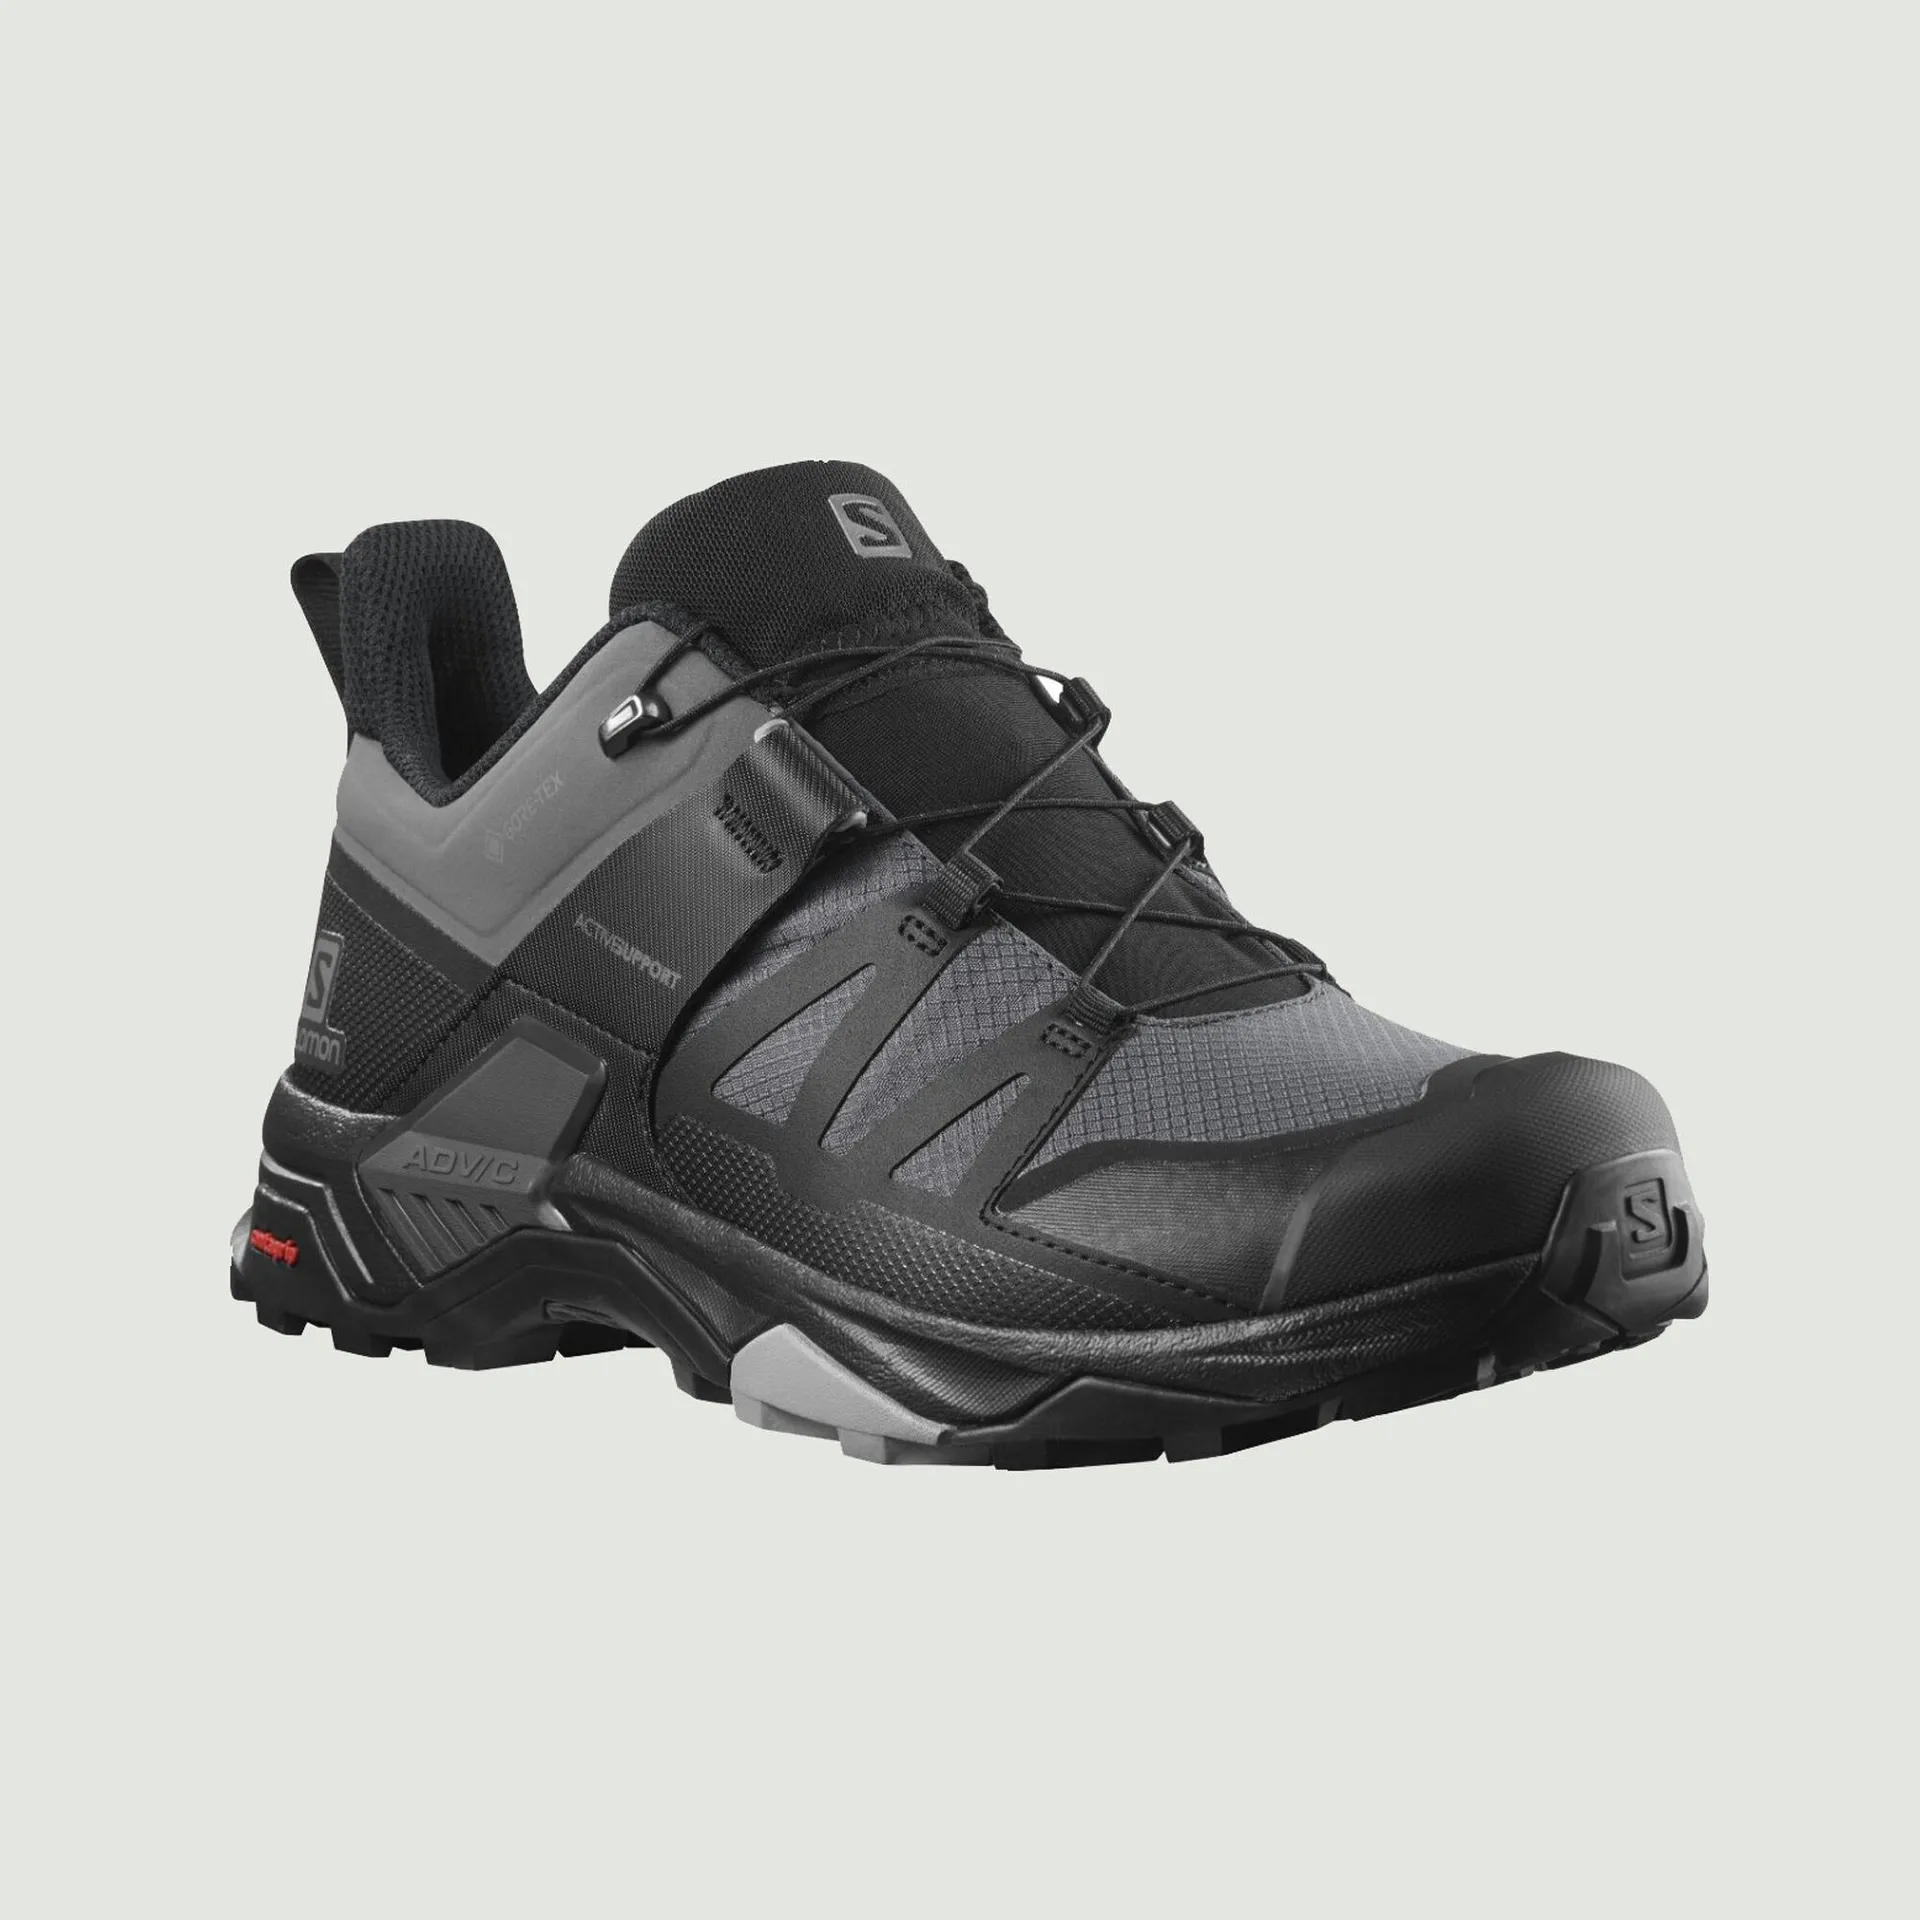 Salomon X Ultra 4 GTX Men's Hiking Shoes